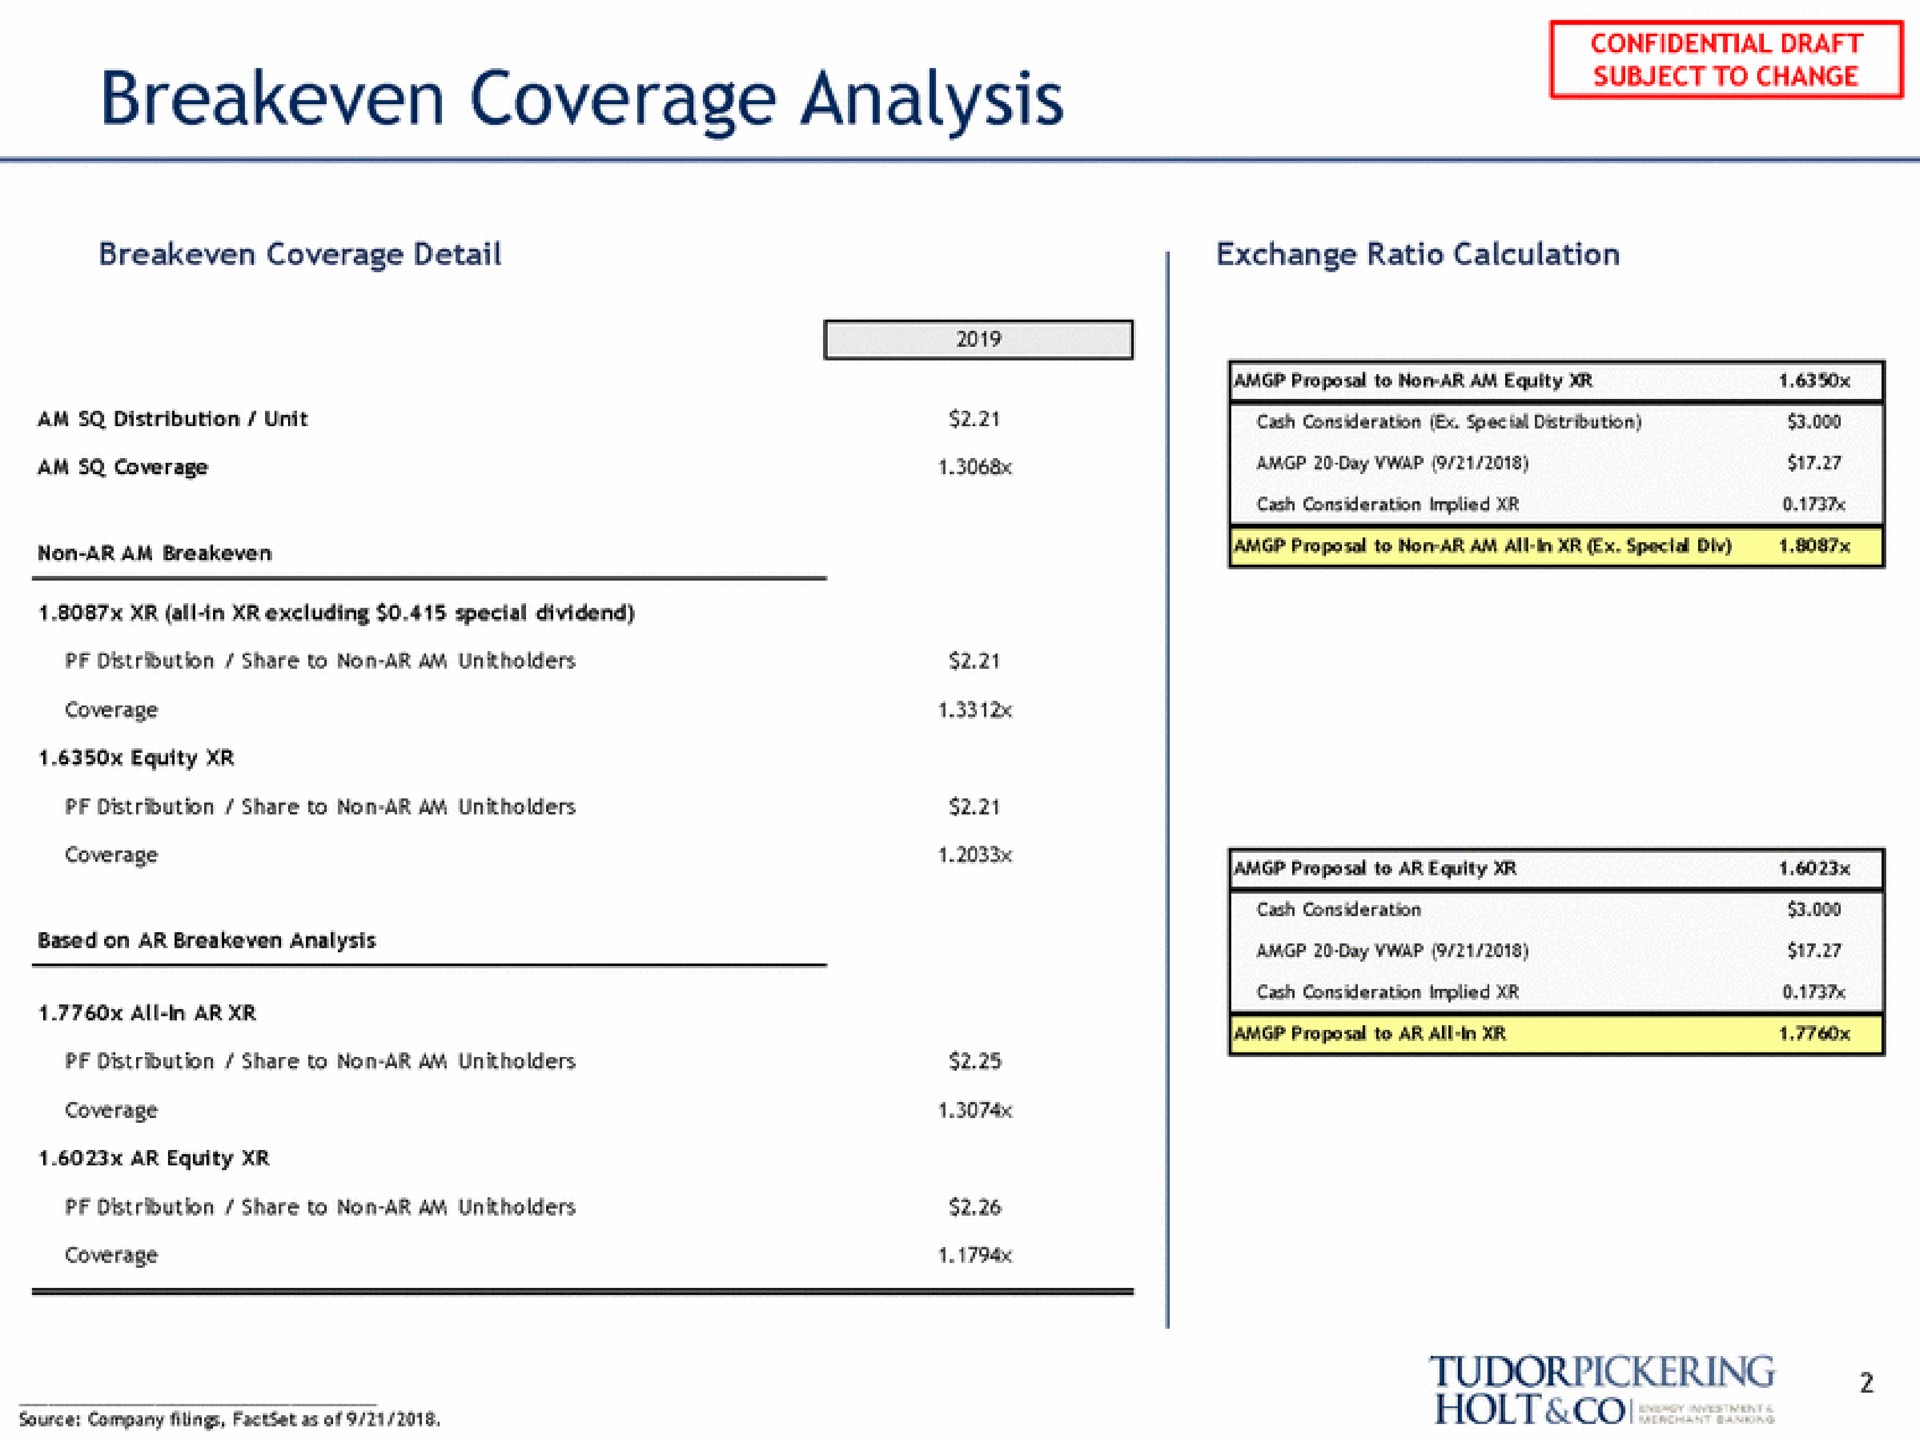 coverage analysis subject to change | Tudor, Pickering, Holt & Co